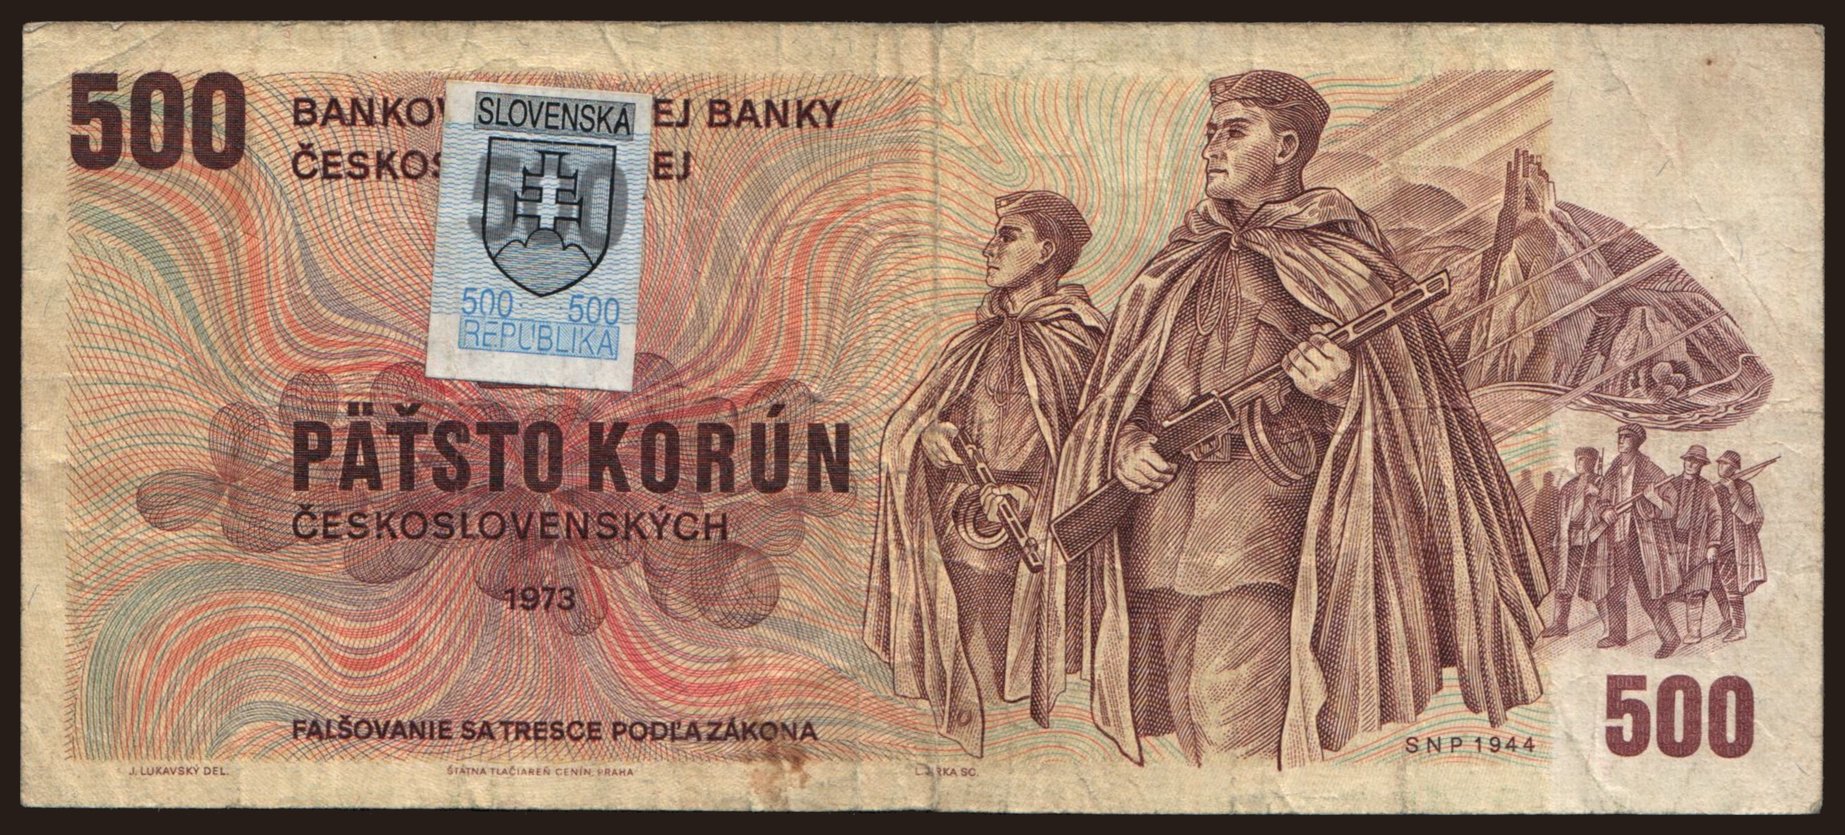 500 Sk, 1973(93)